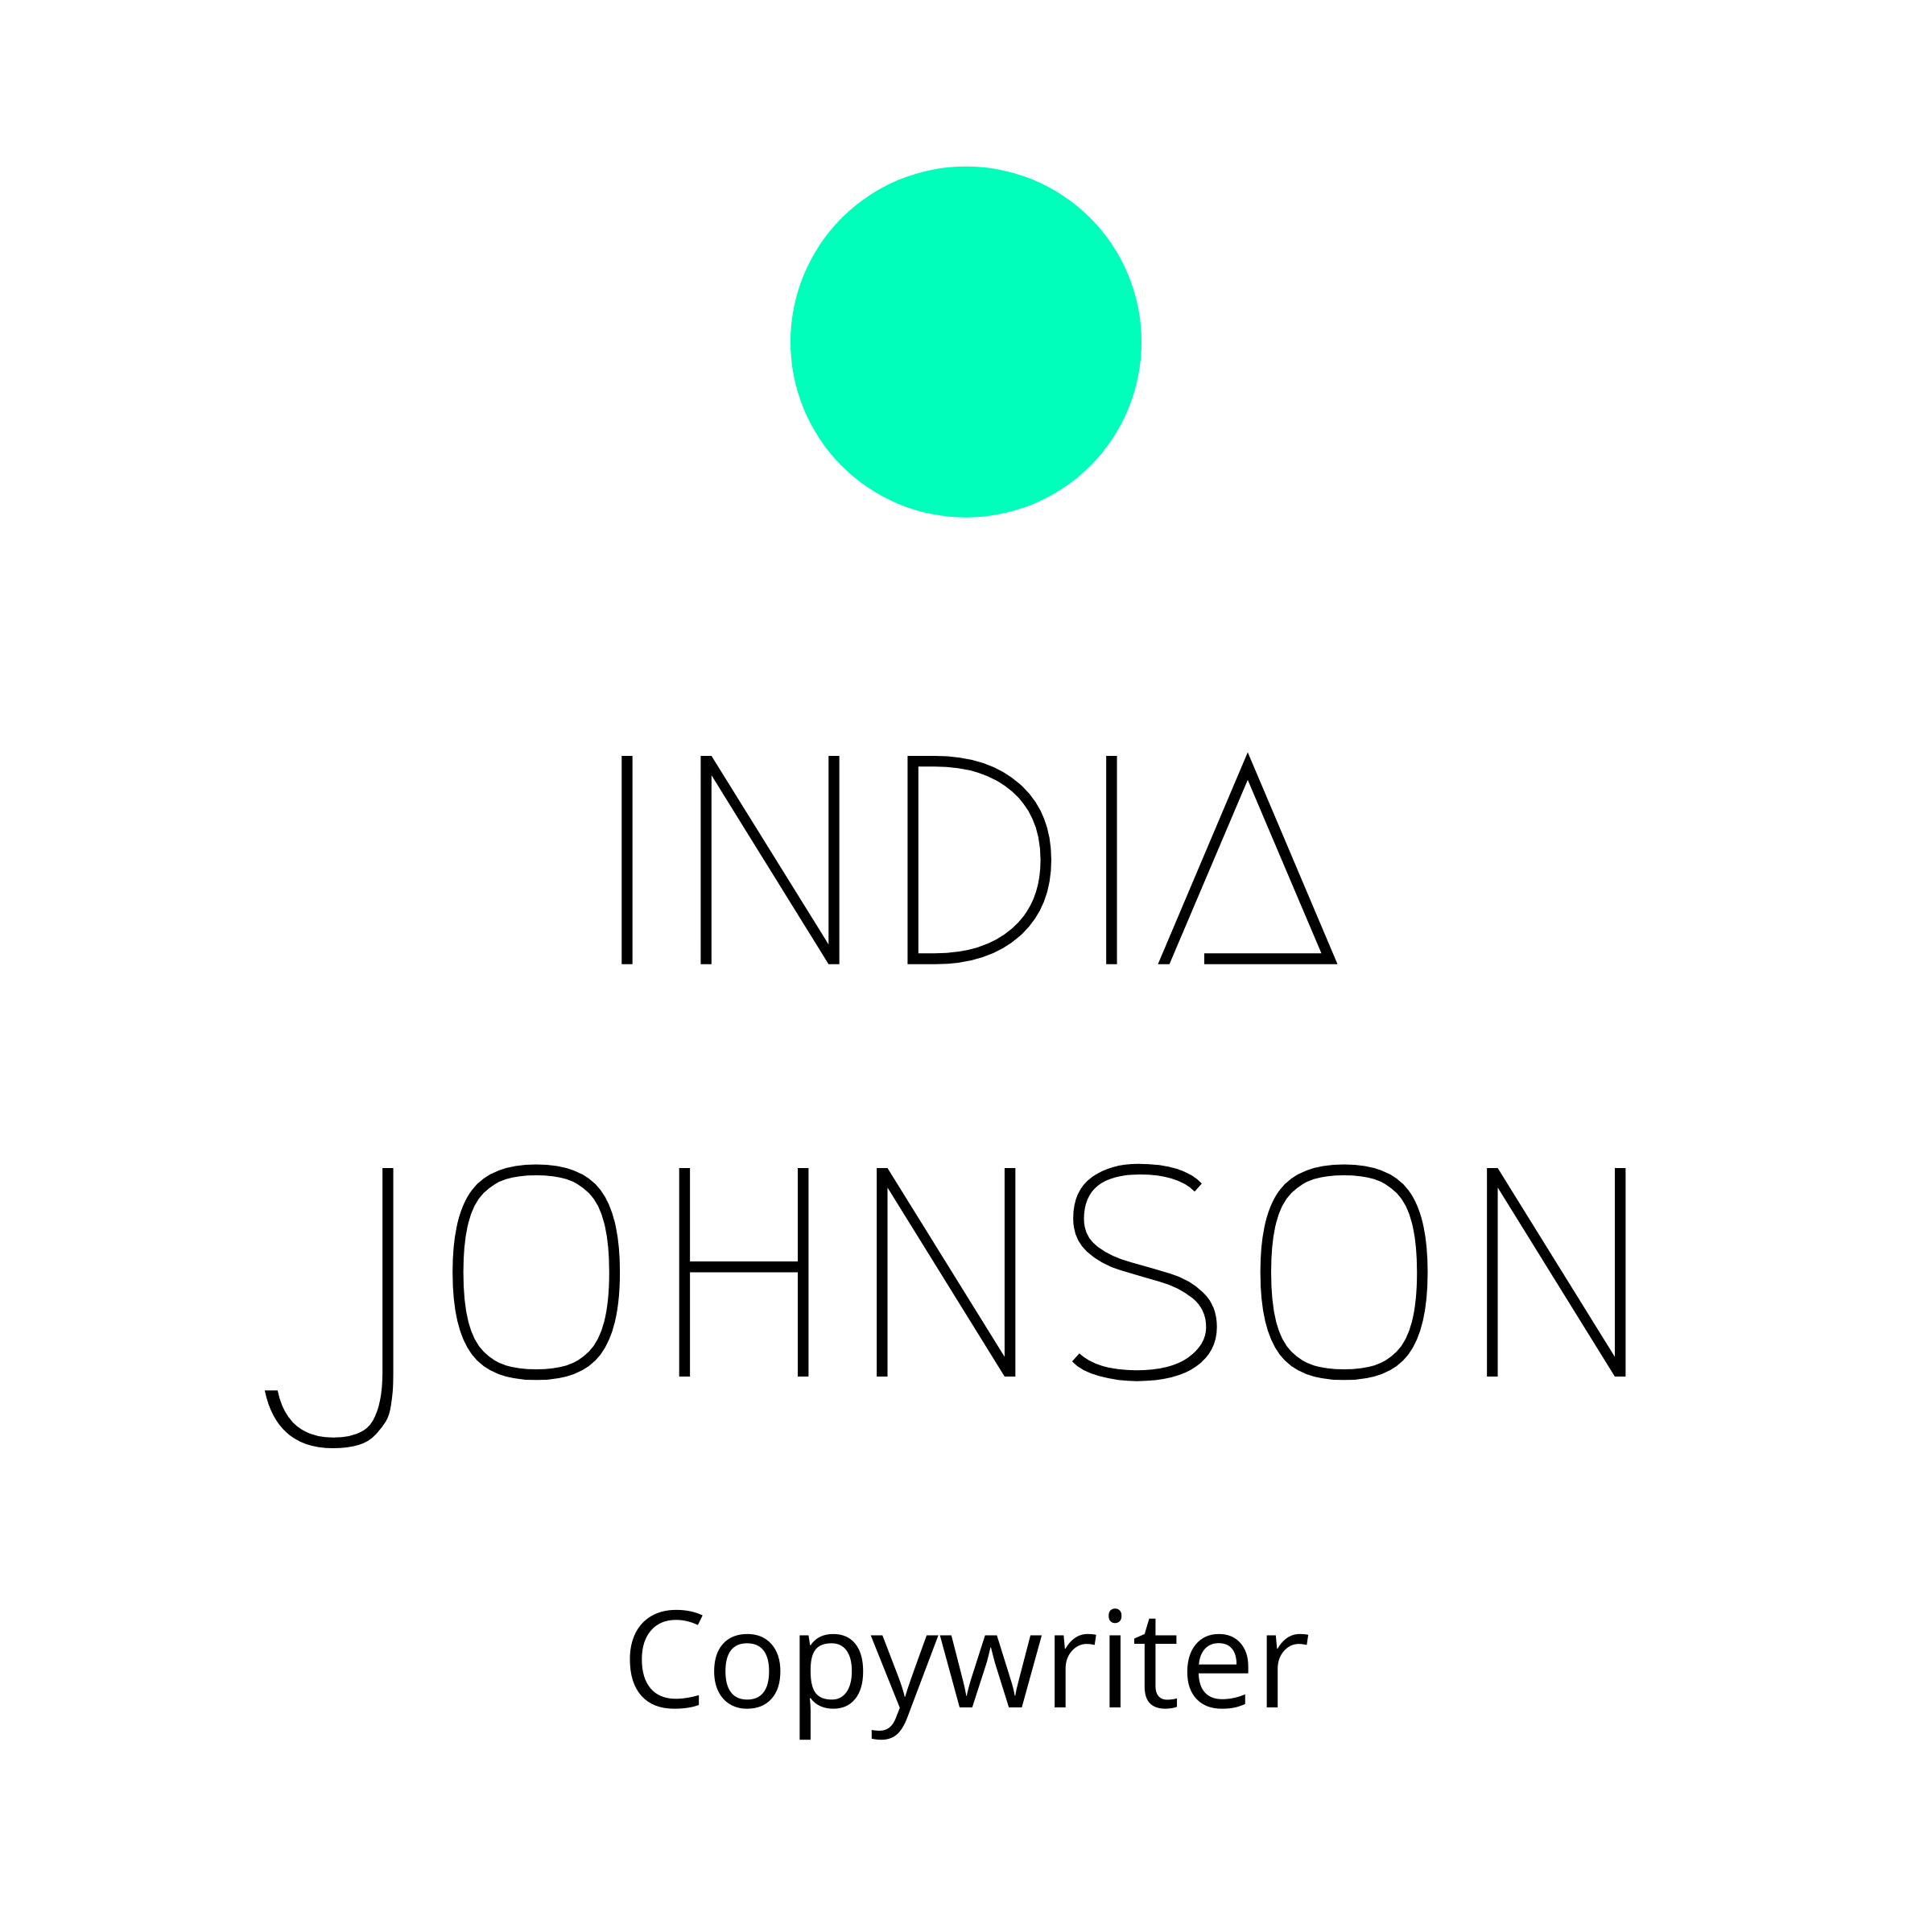 India Johnson London freelance copywriter